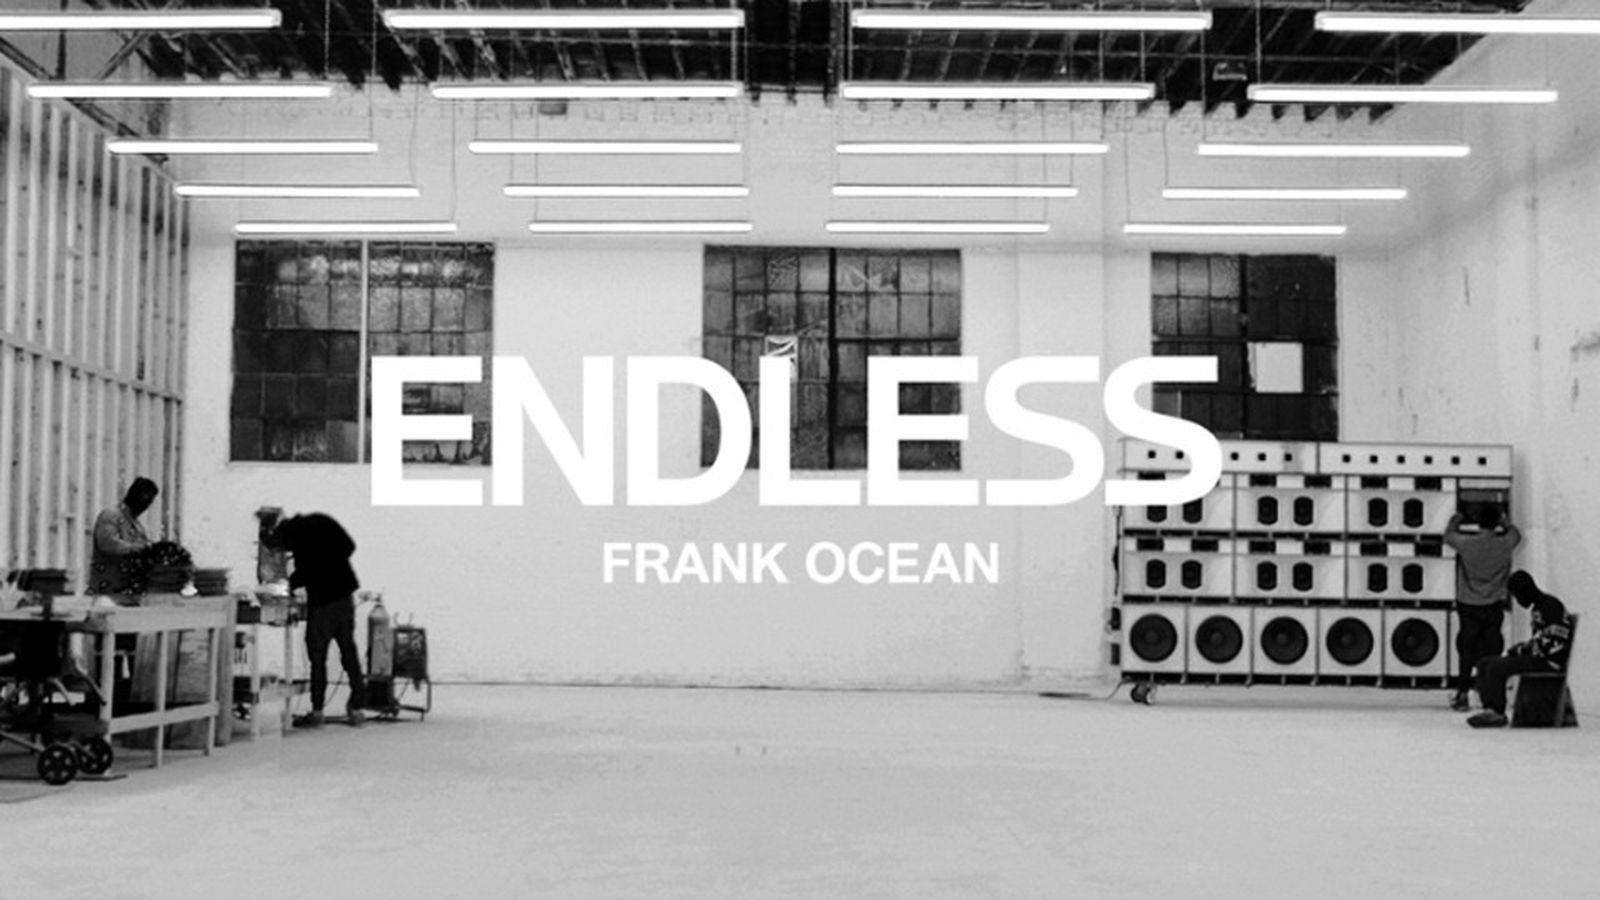 Frank Ocean's visual album Endless is an exercise in enjoying